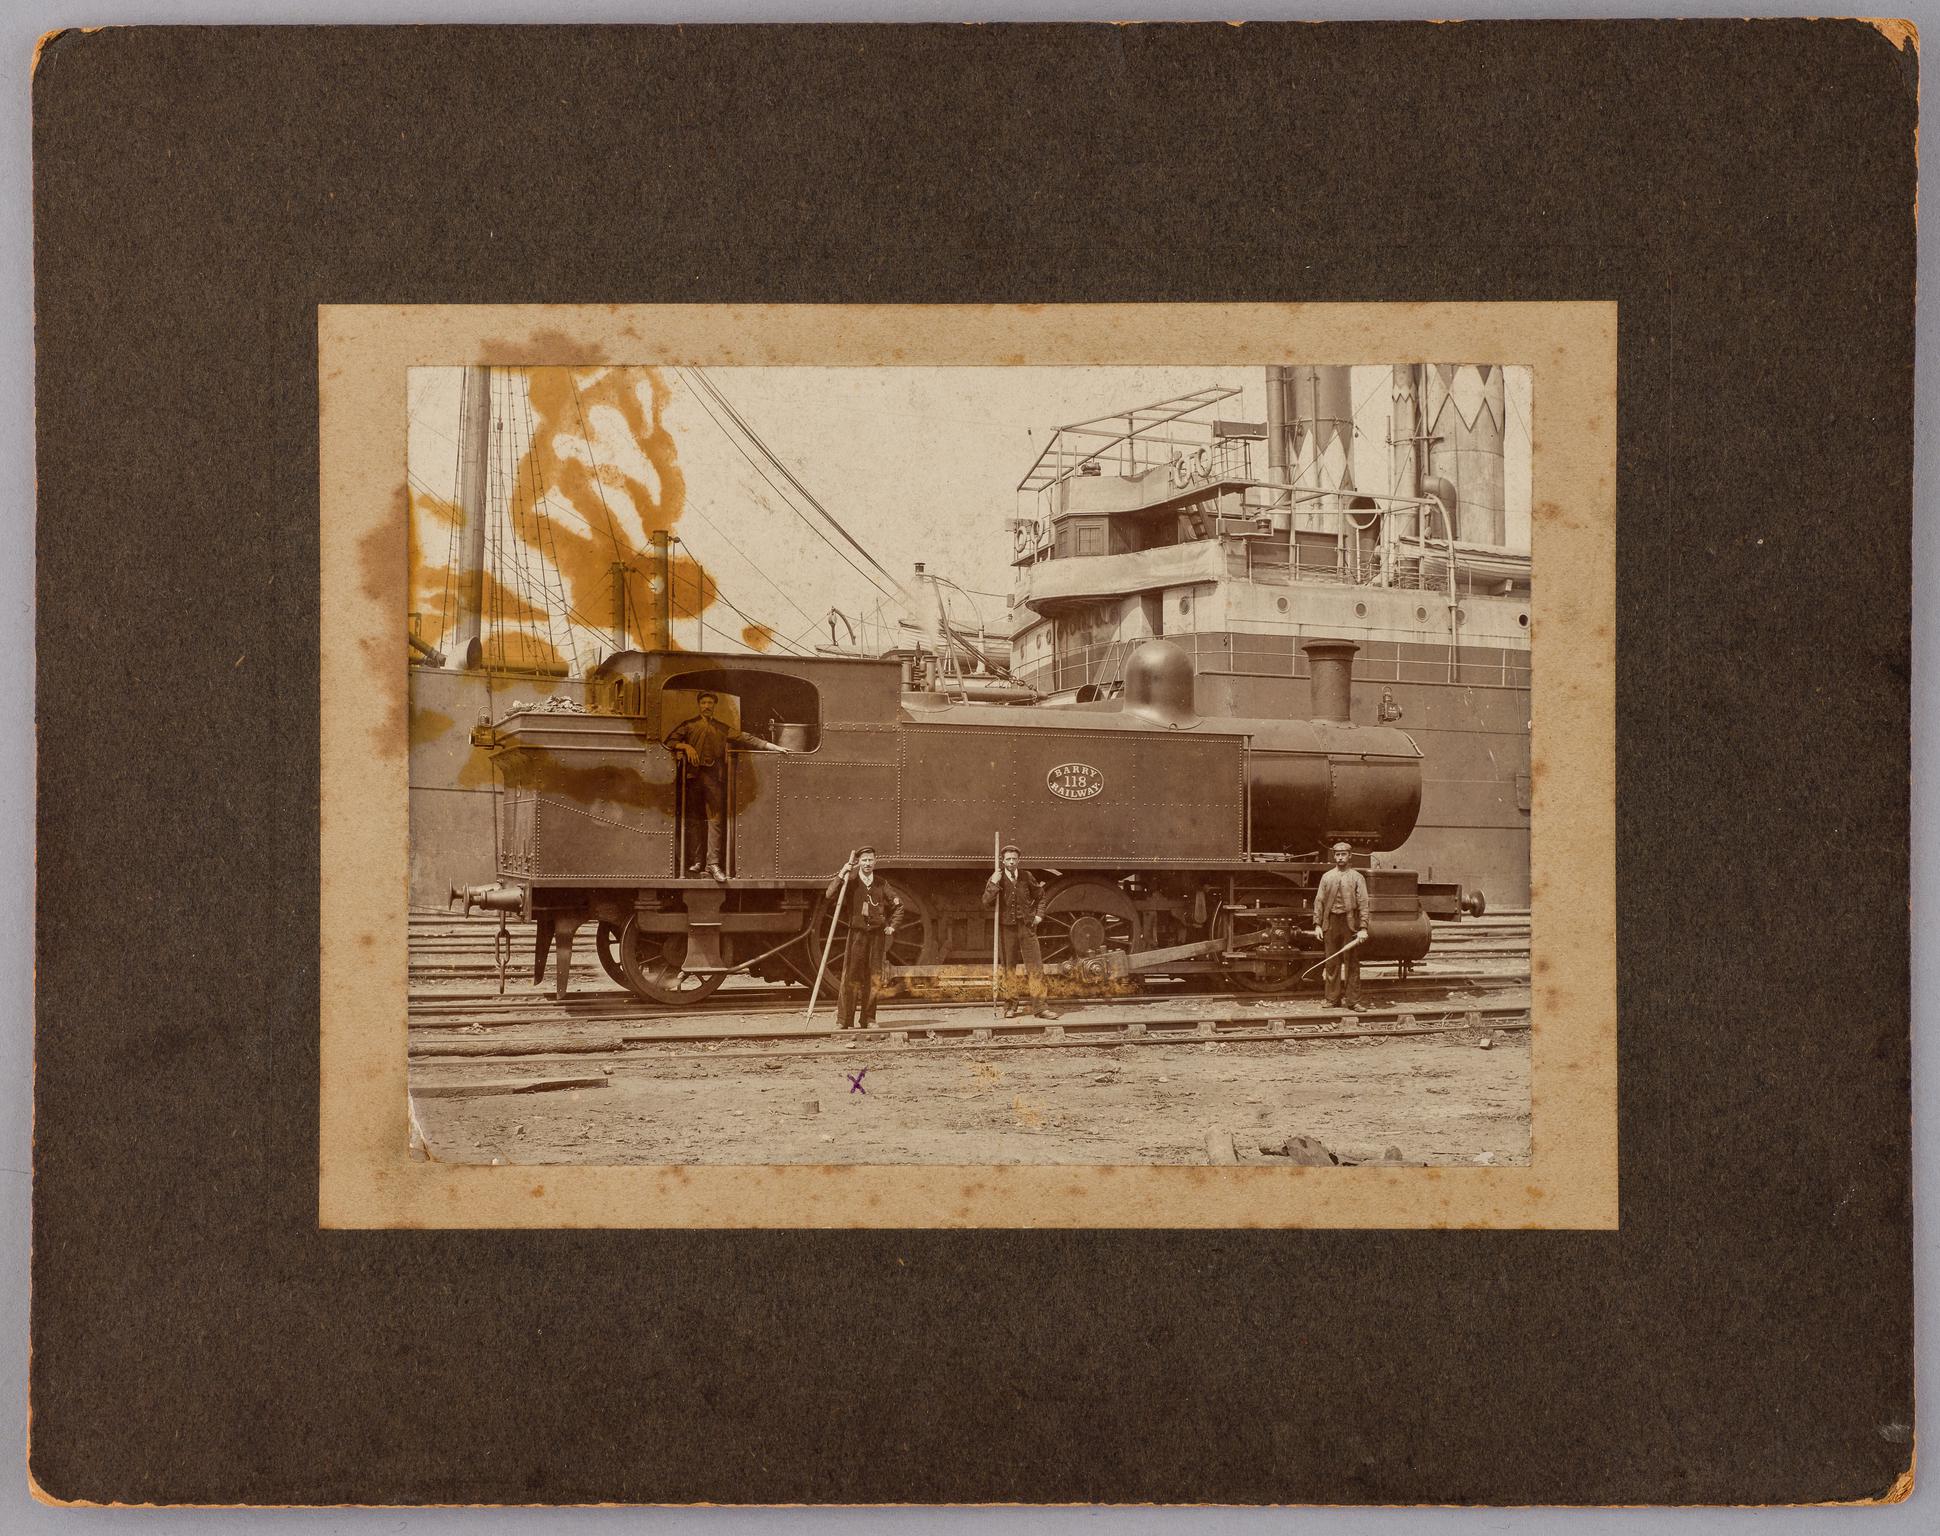 Barry Railway locomotive, photograph